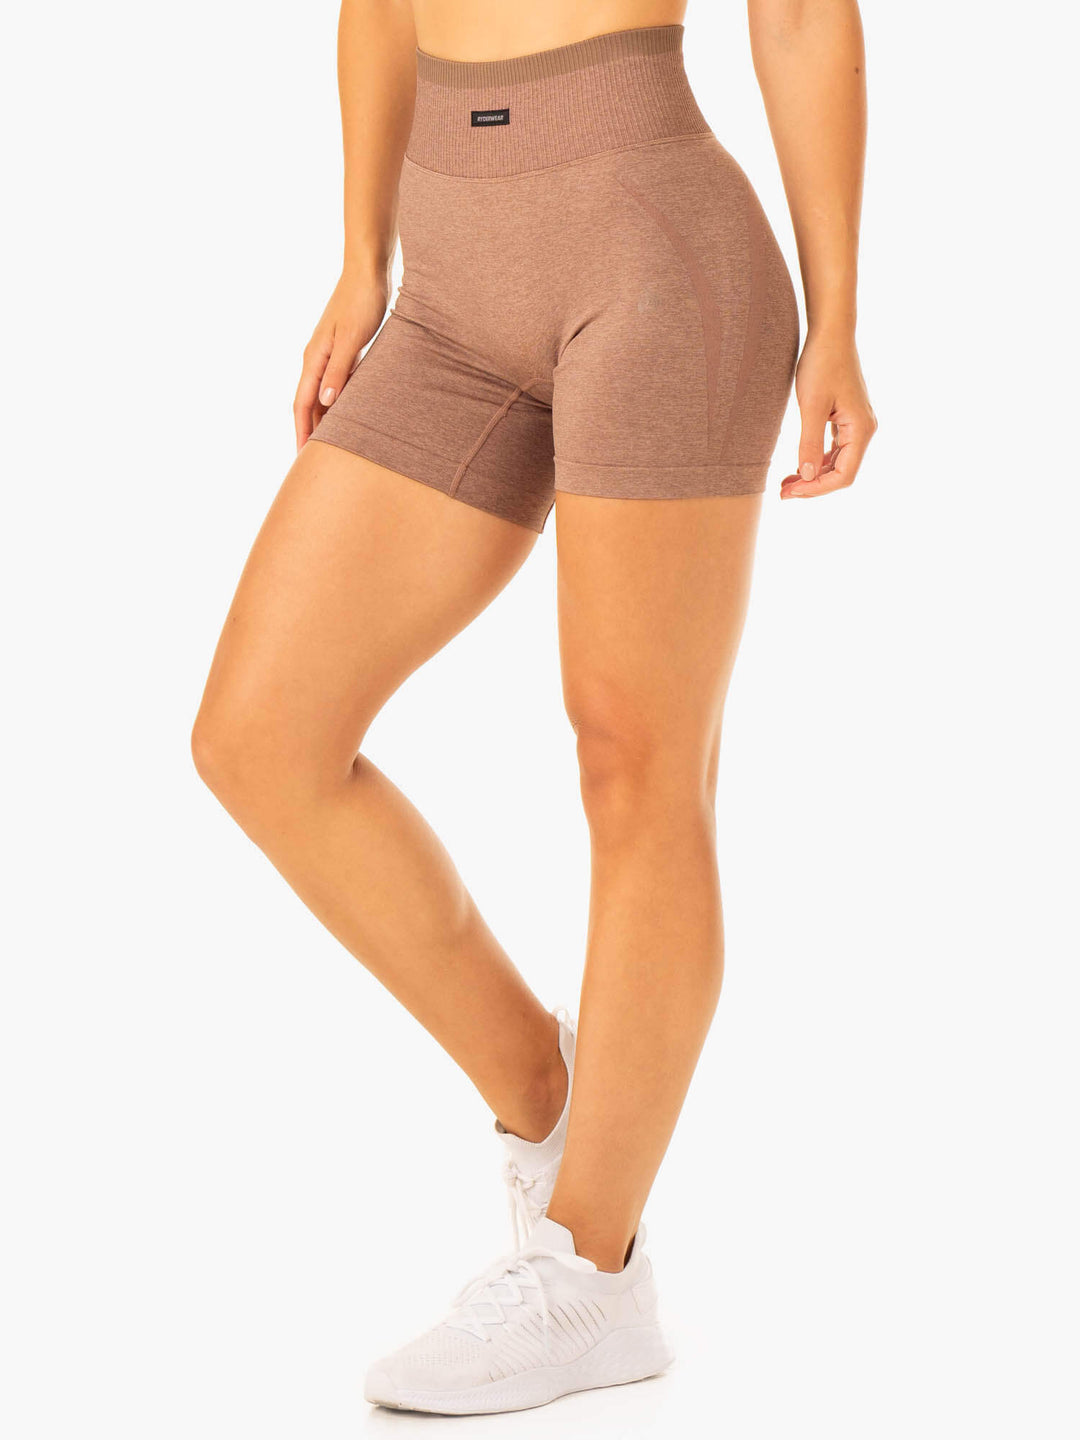 Excel Seamless High Waisted Shorts - Mocha Marl Clothing Ryderwear 